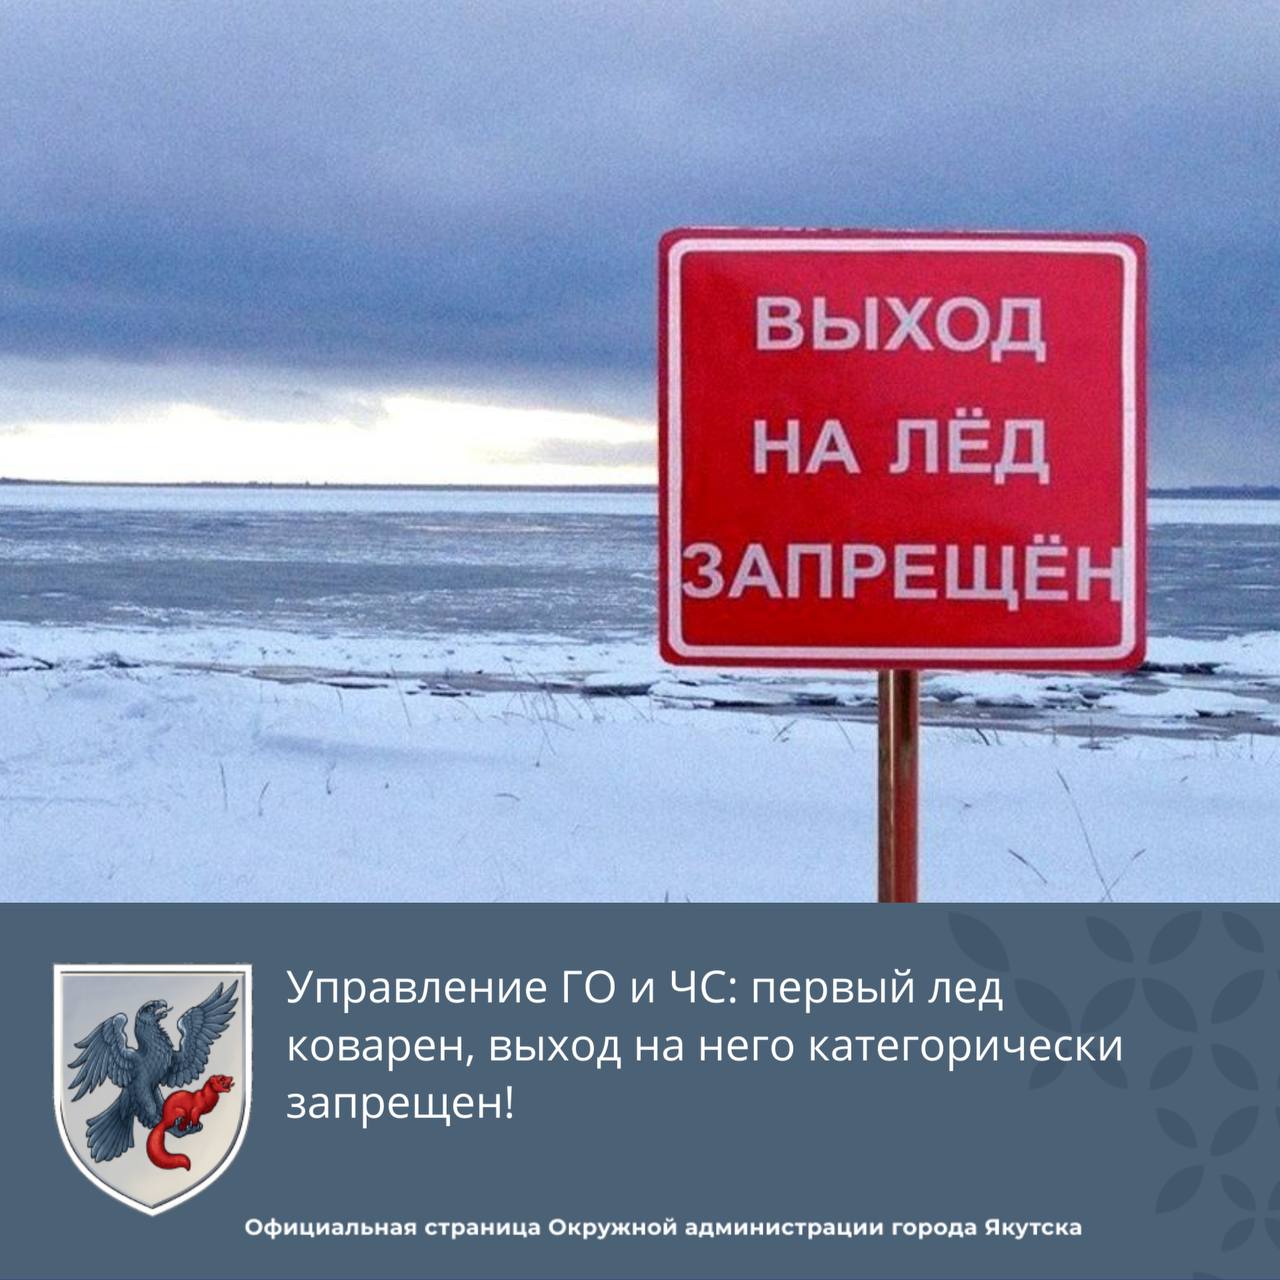 Запрет выезда на лед. Выход на лед запрещен. Запрет выхода на лед. Выход на лед запрещен табличка. Выход га лед запрещён.